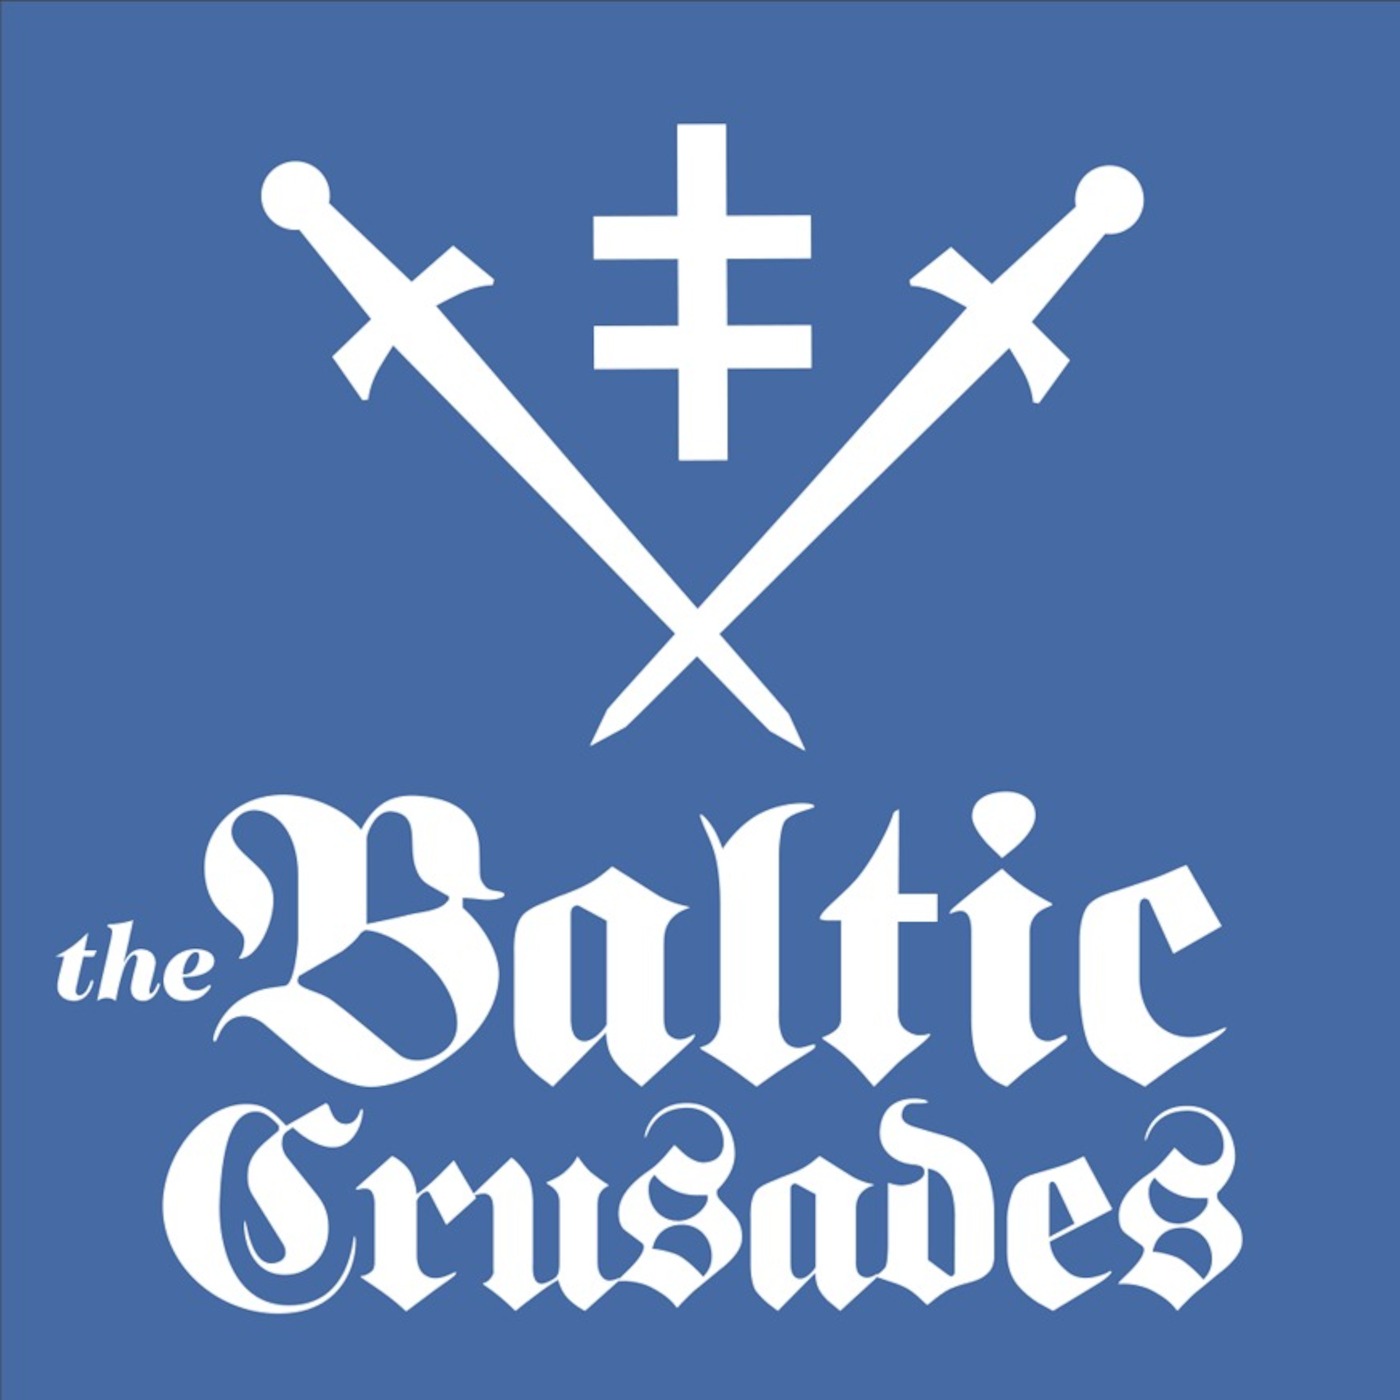 Episode 224 - The Baltic Crusades